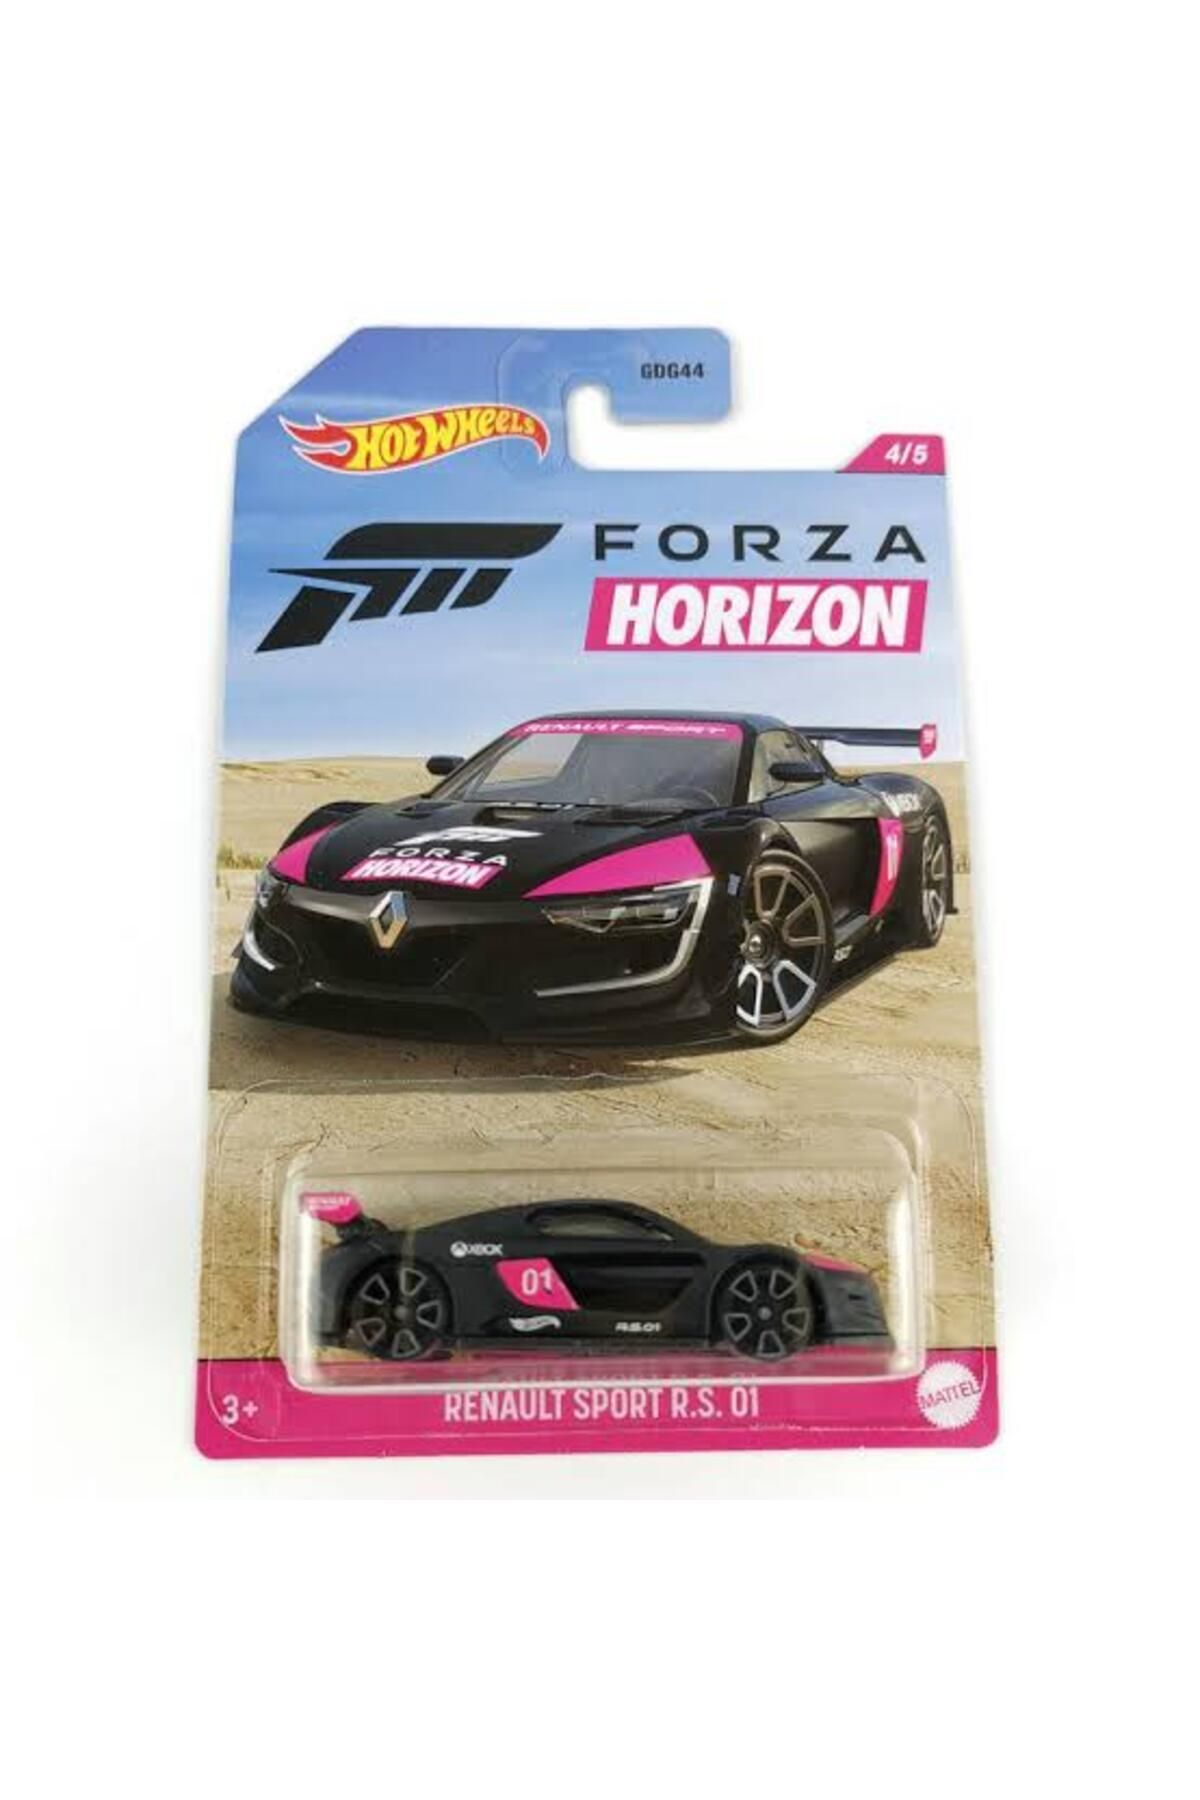 HOT WHEELS Forza Horizon Renault sport rs